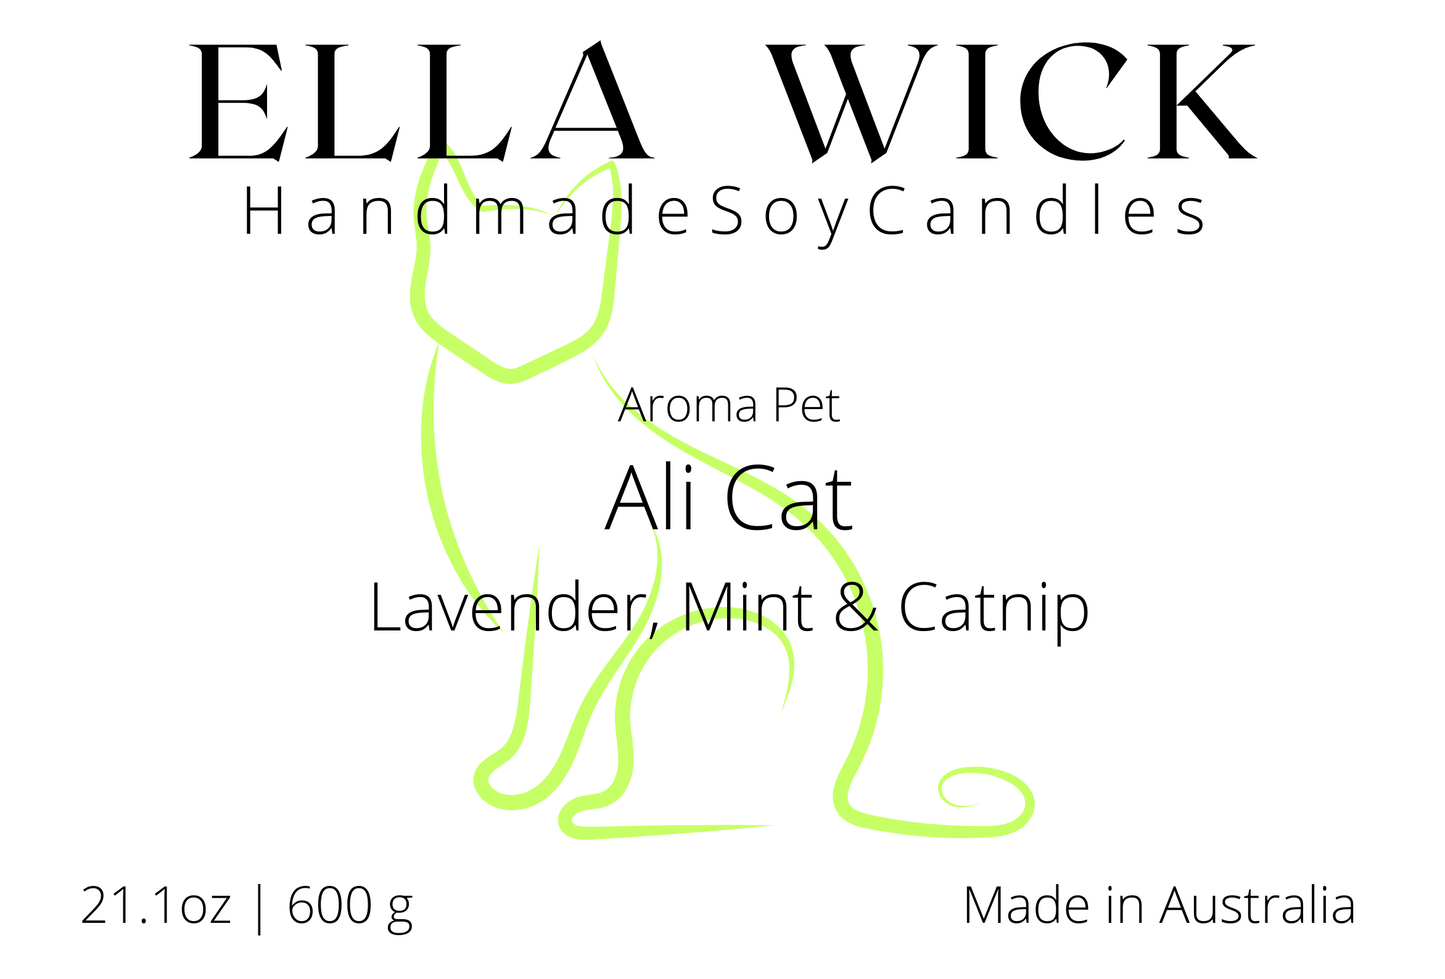 Ali Cat - Lavender, Mint & Catnip